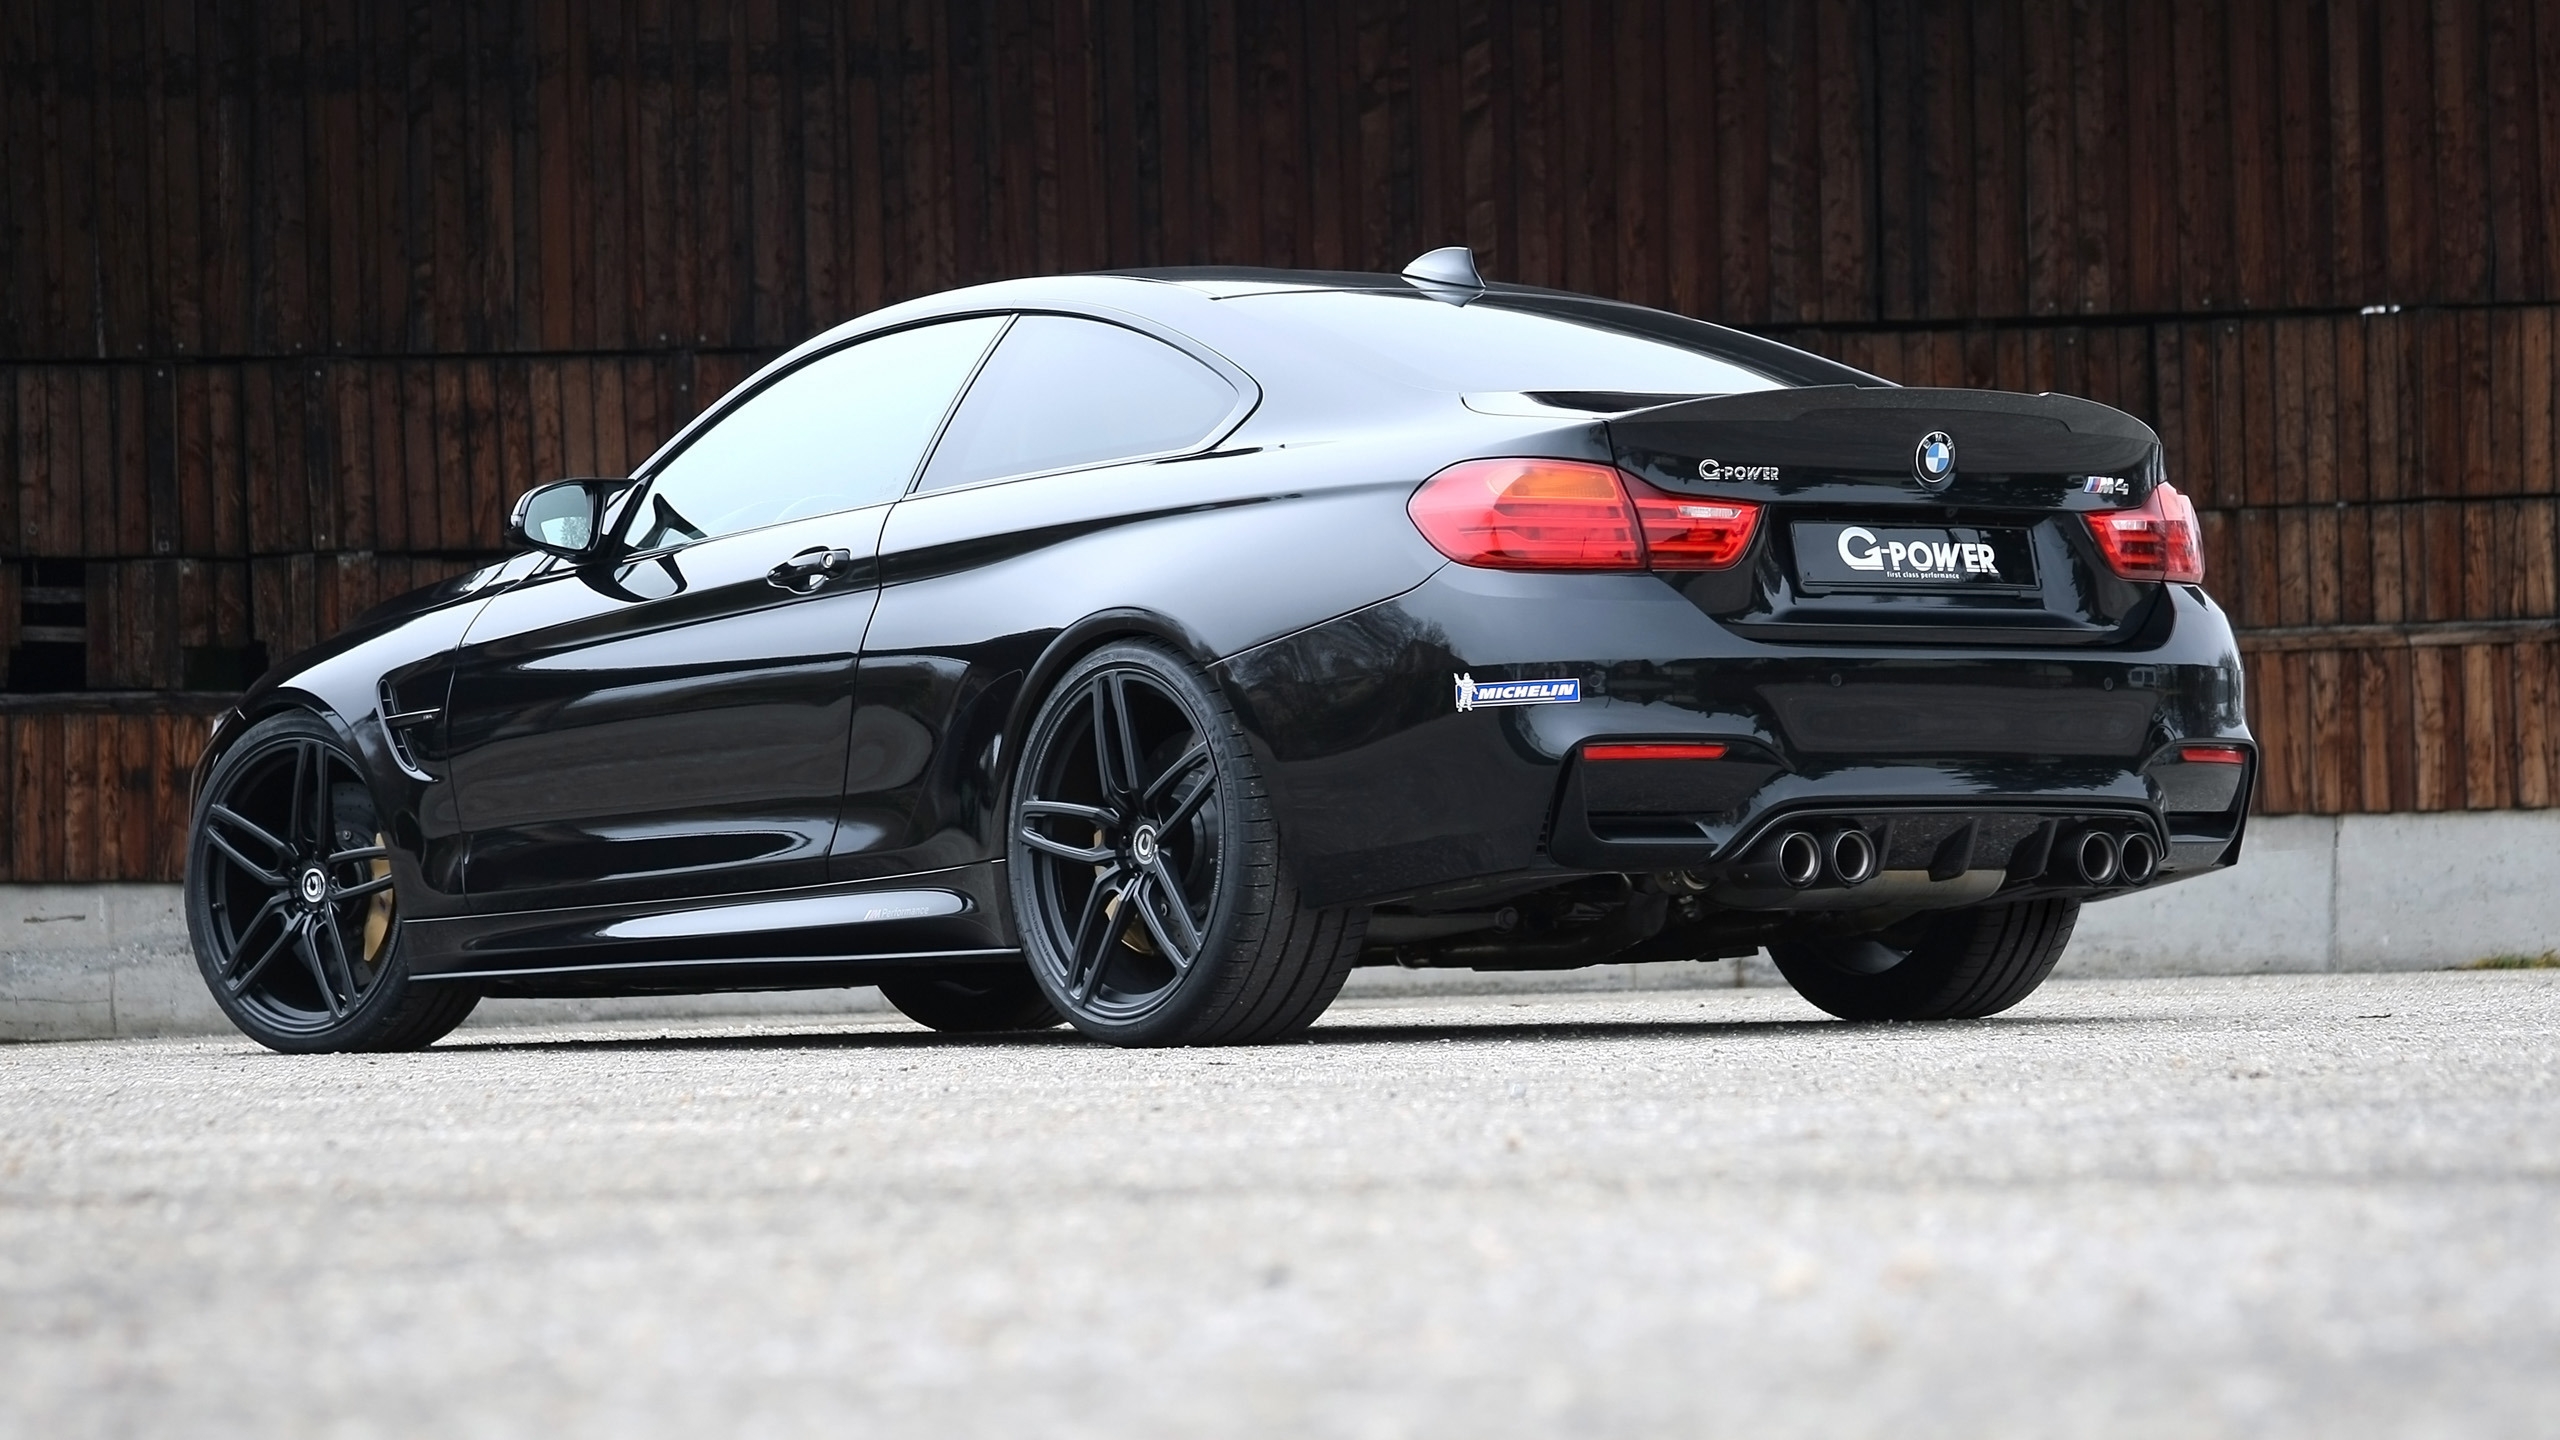 Black BMW M4 G-Power 2014 Rear for 2560x1440 HDTV resolution